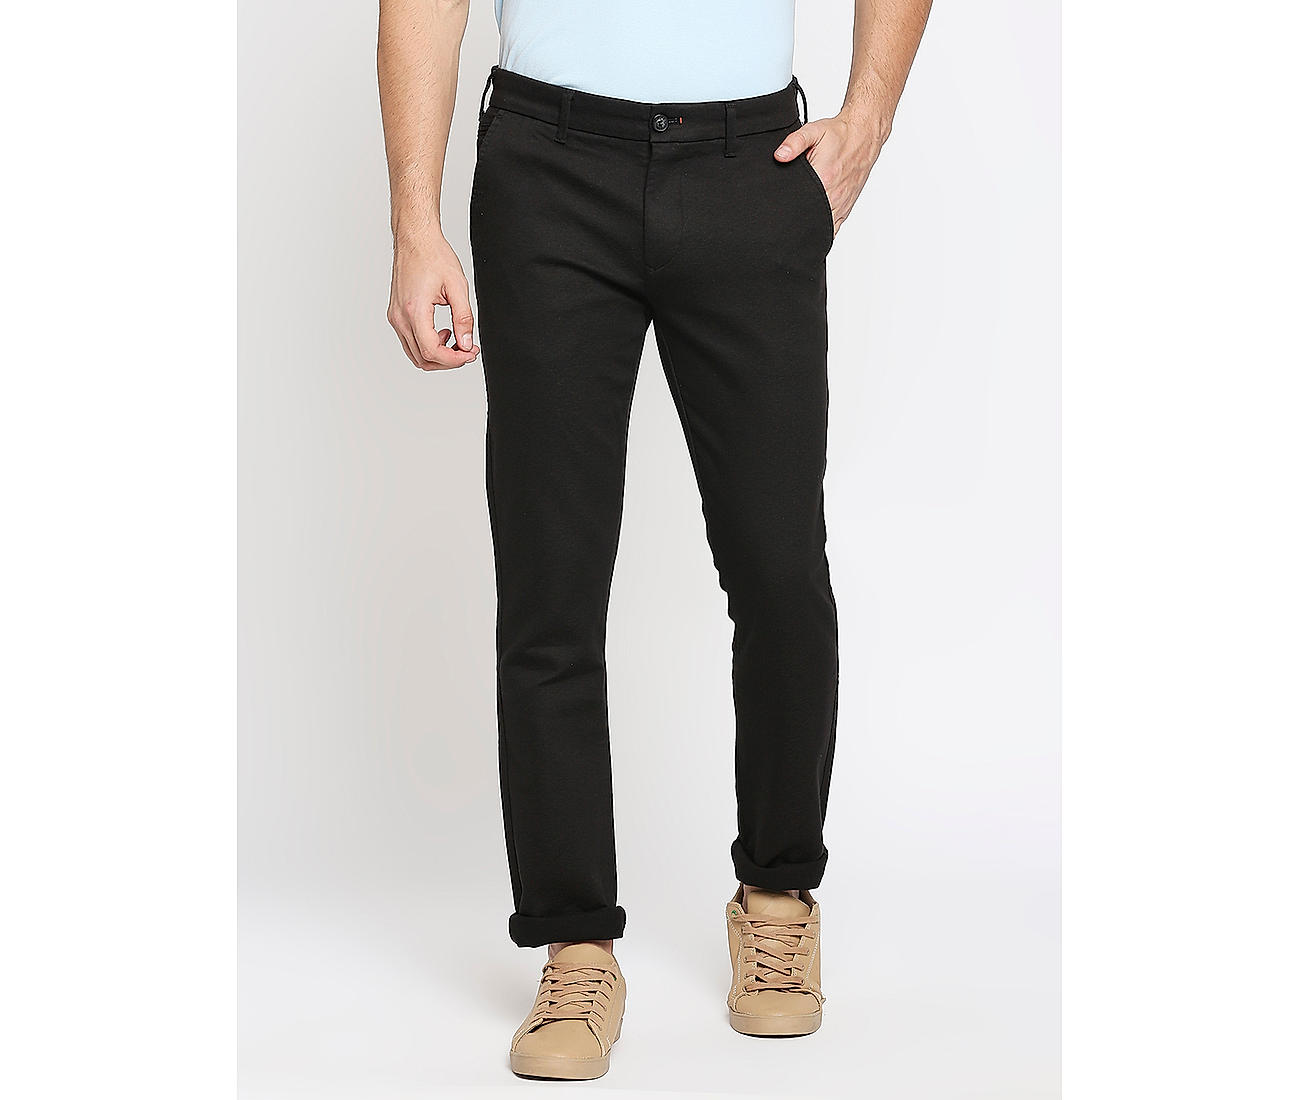 Buy Men Black Slim Fit Solid Casual Trousers Online  794179  Allen Solly